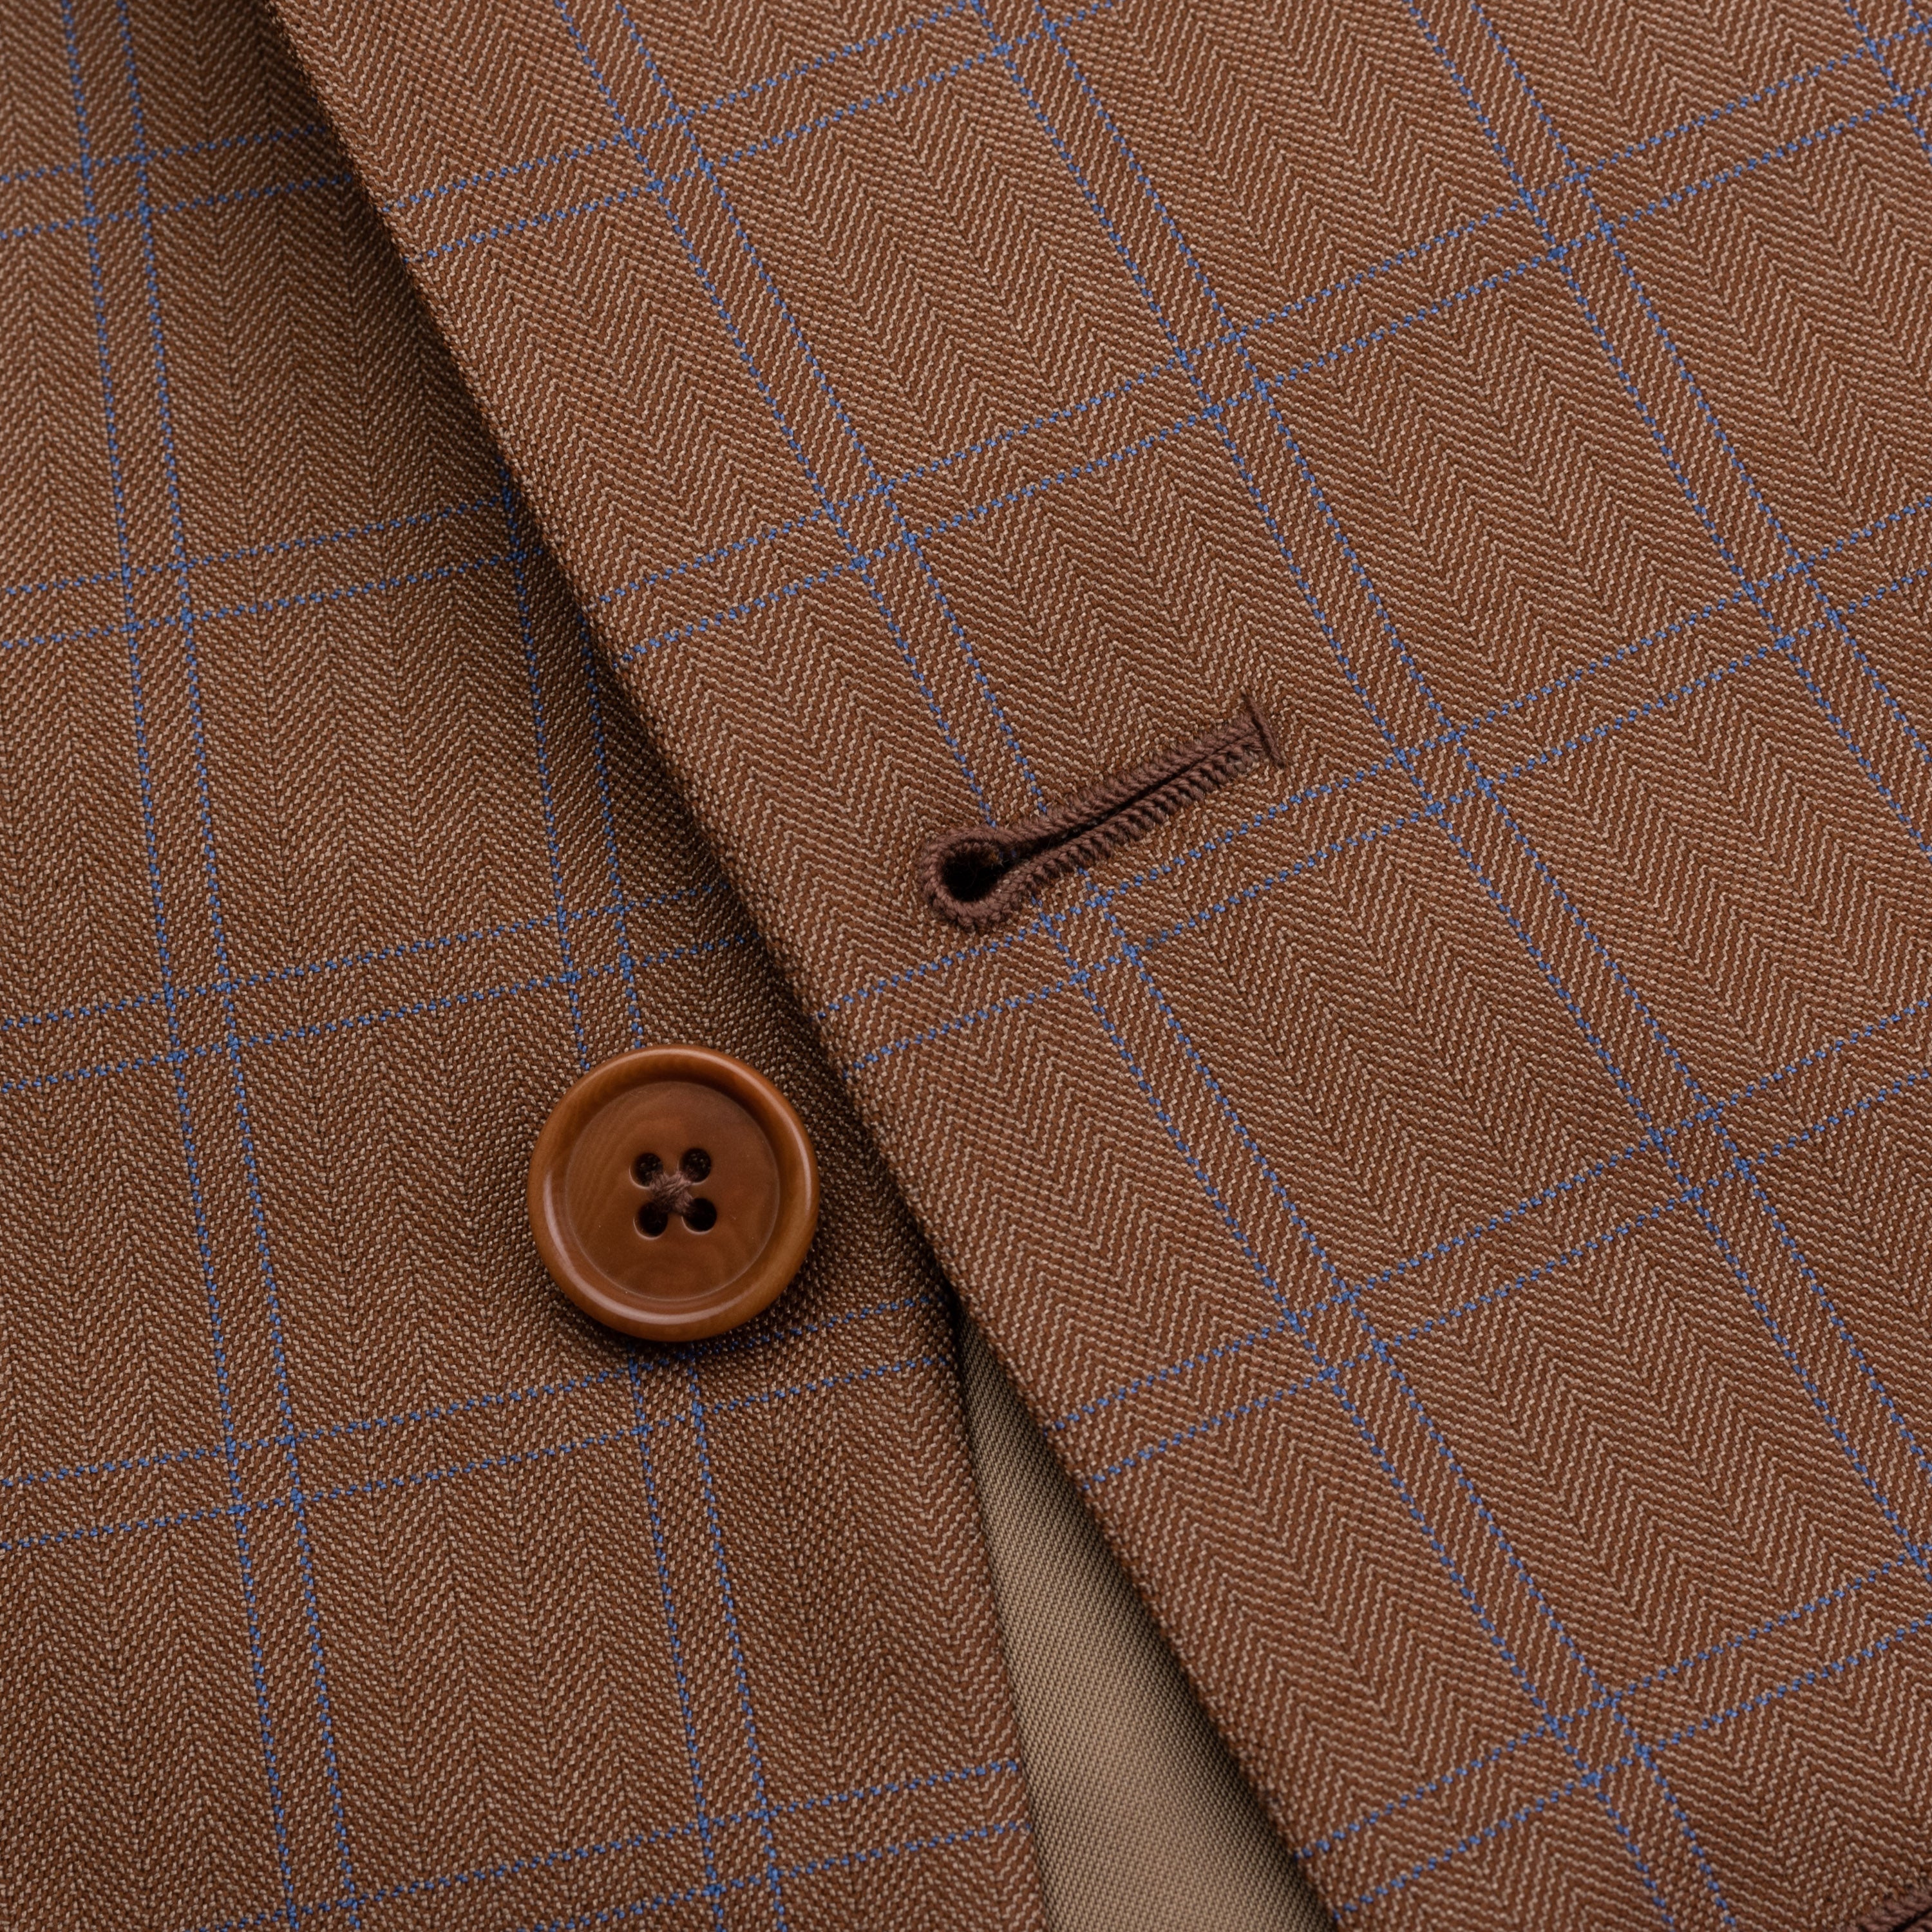 CASTANGIA 1850 Brown Herringbone Plaid Wool-Silk 4 Button Jacket NEW CASTANGIA